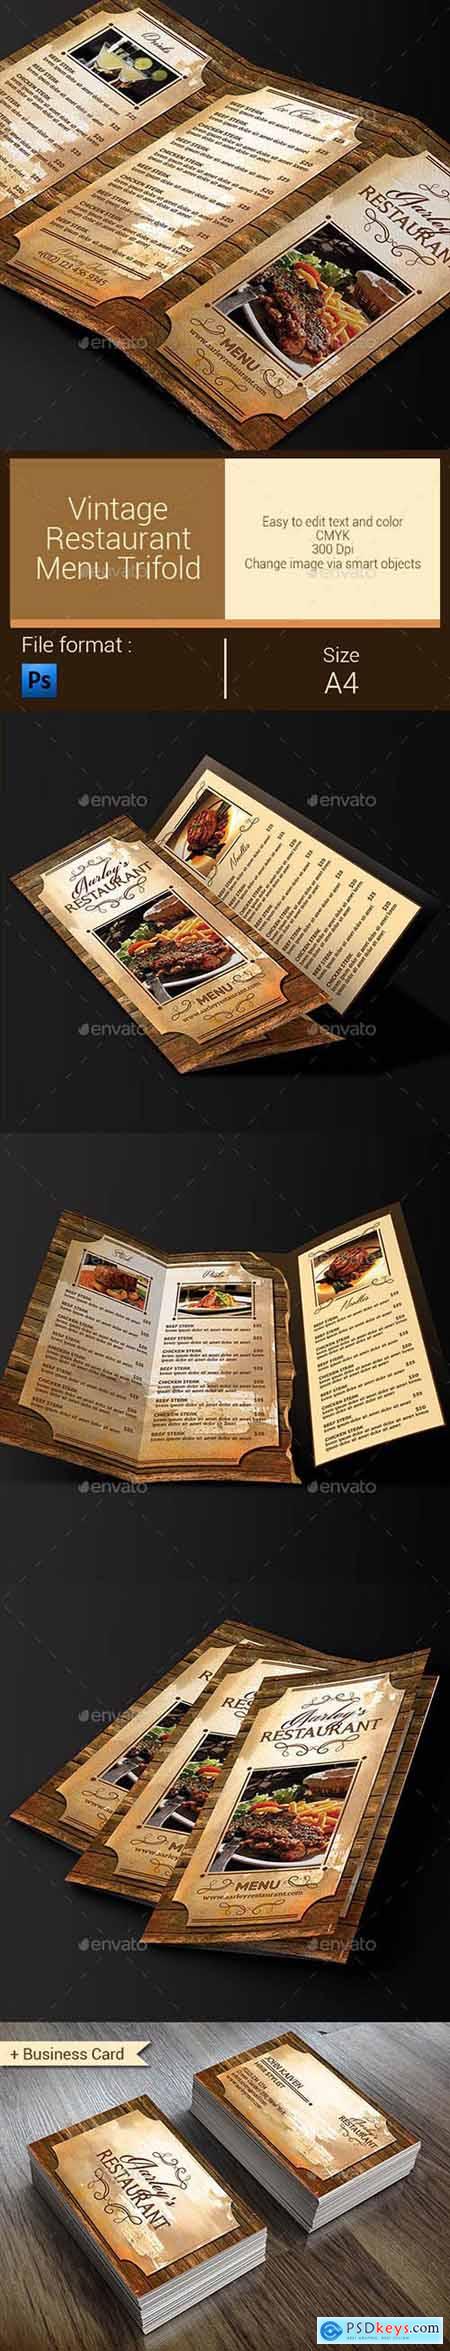 Graphicriver Vintage Restaurant Menu Trifold + Business Card